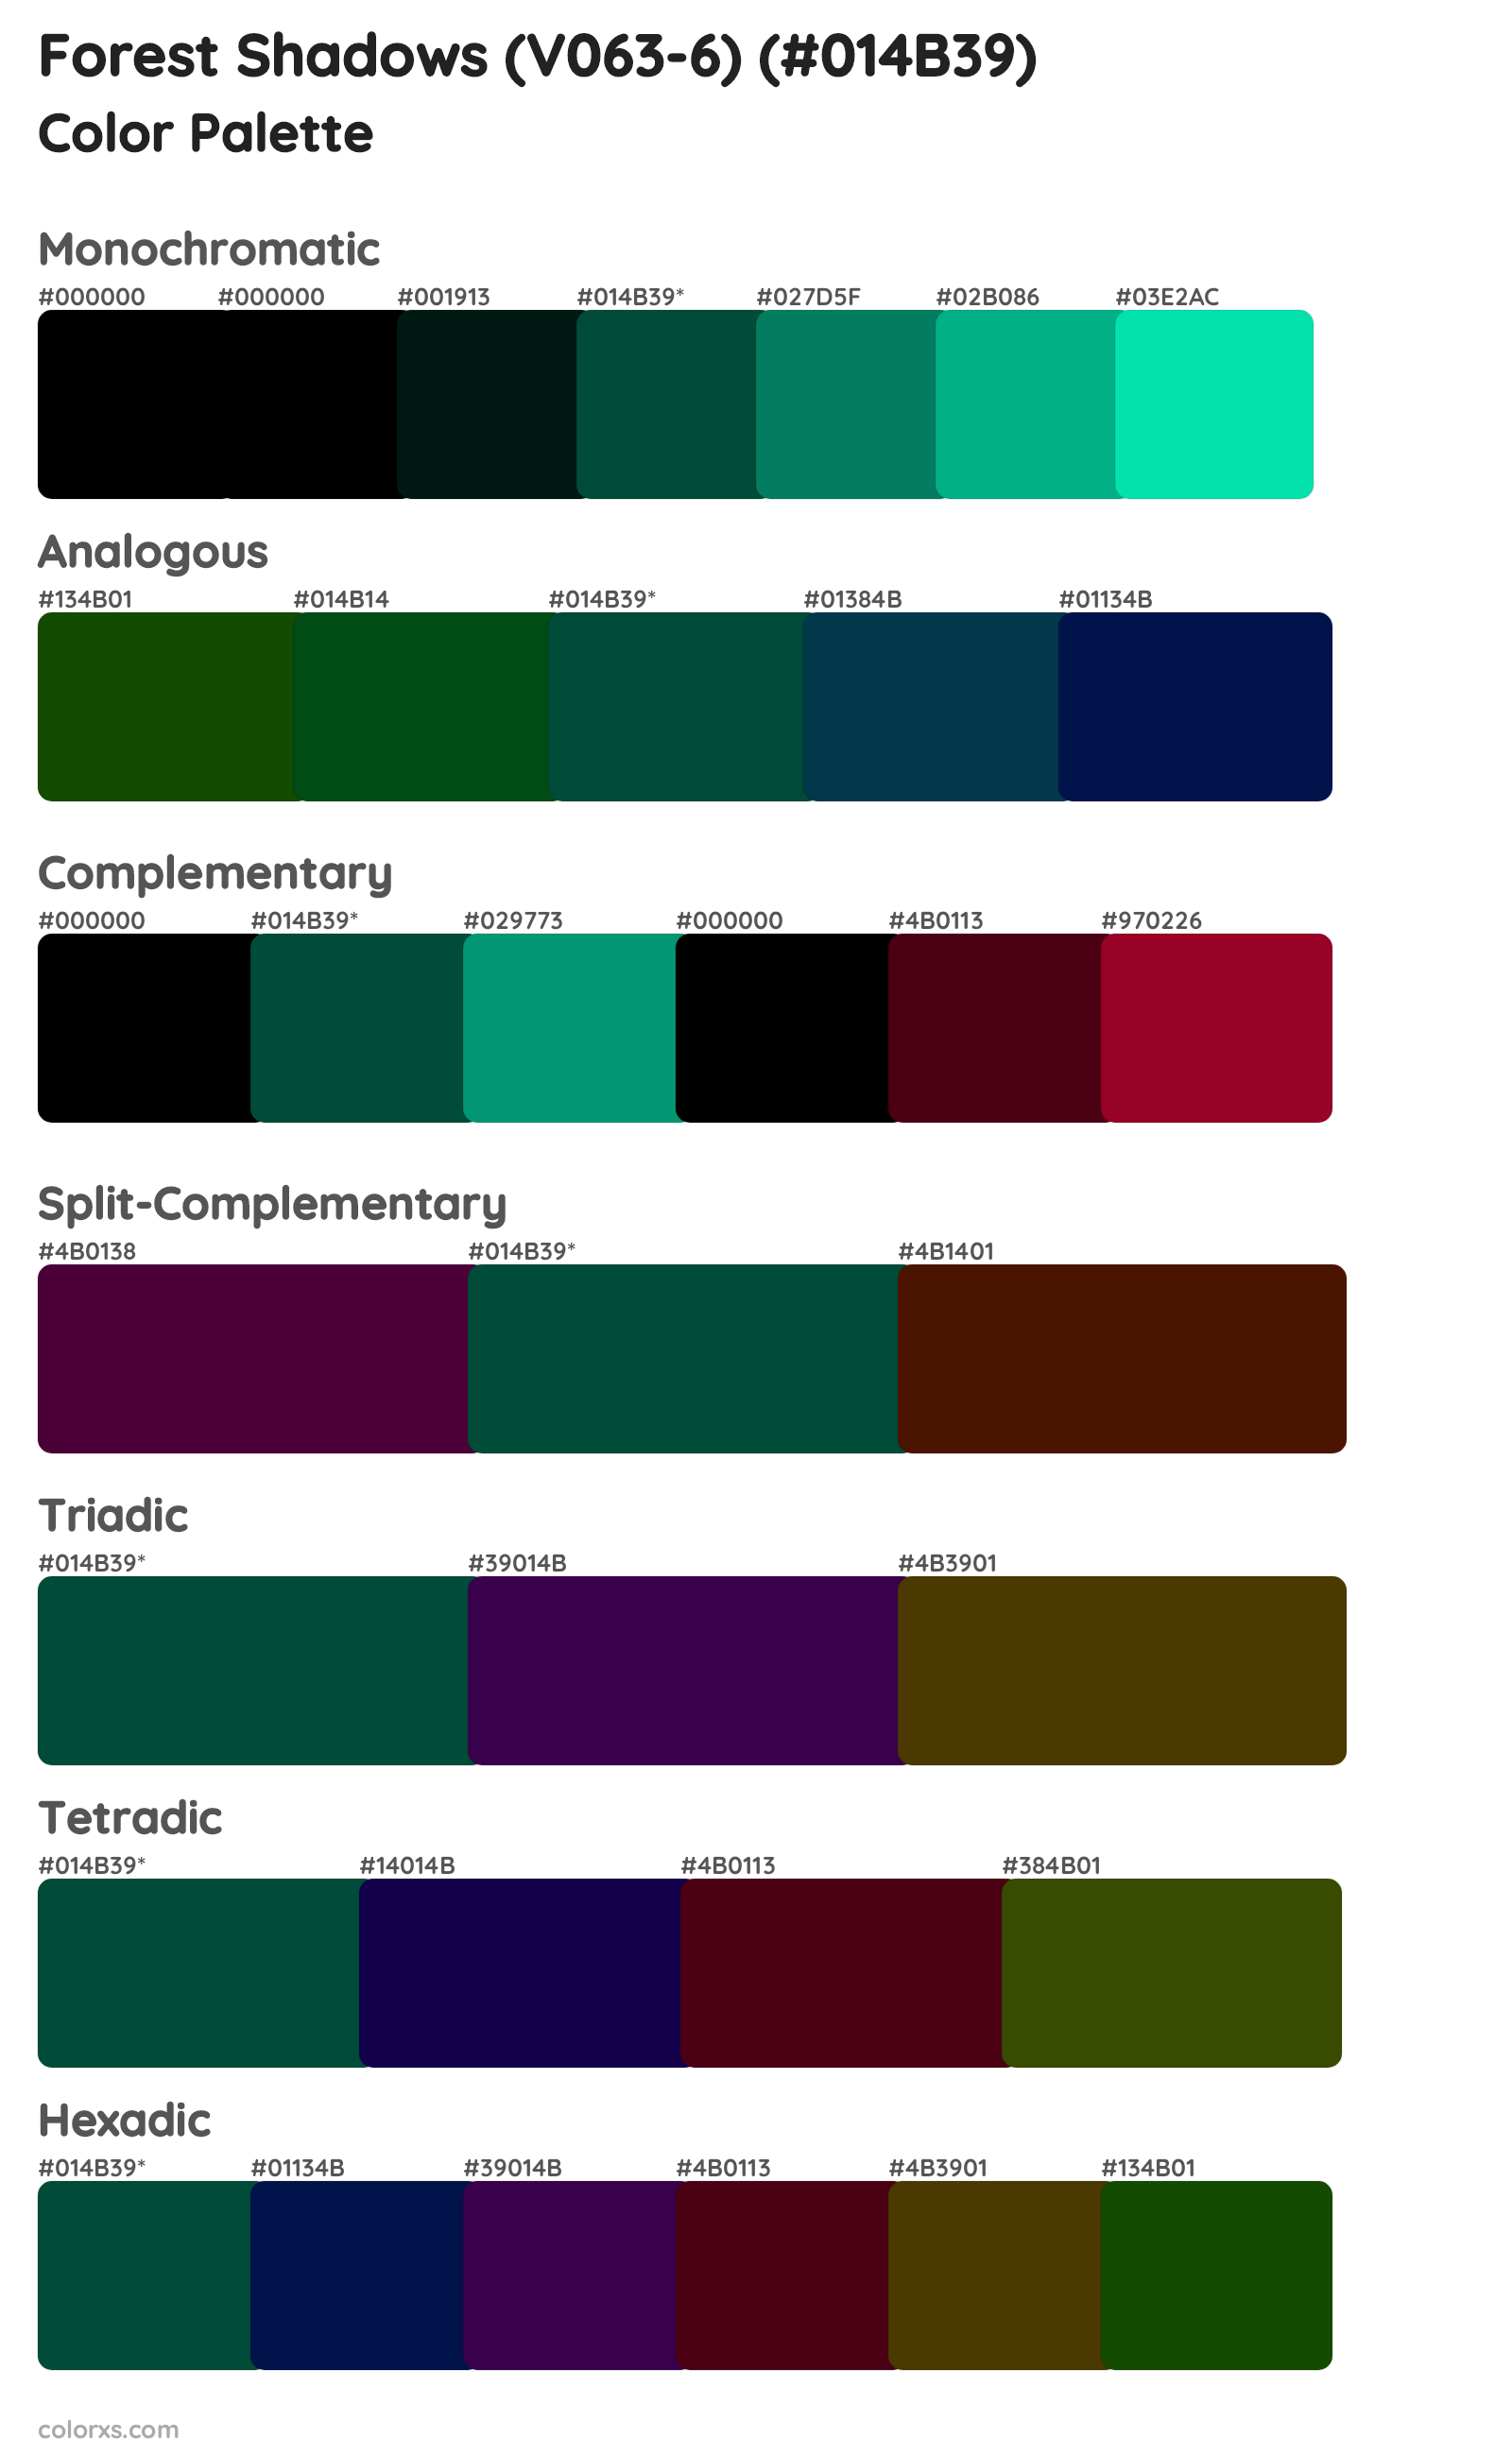 Forest Shadows (V063-6) Color Scheme Palettes